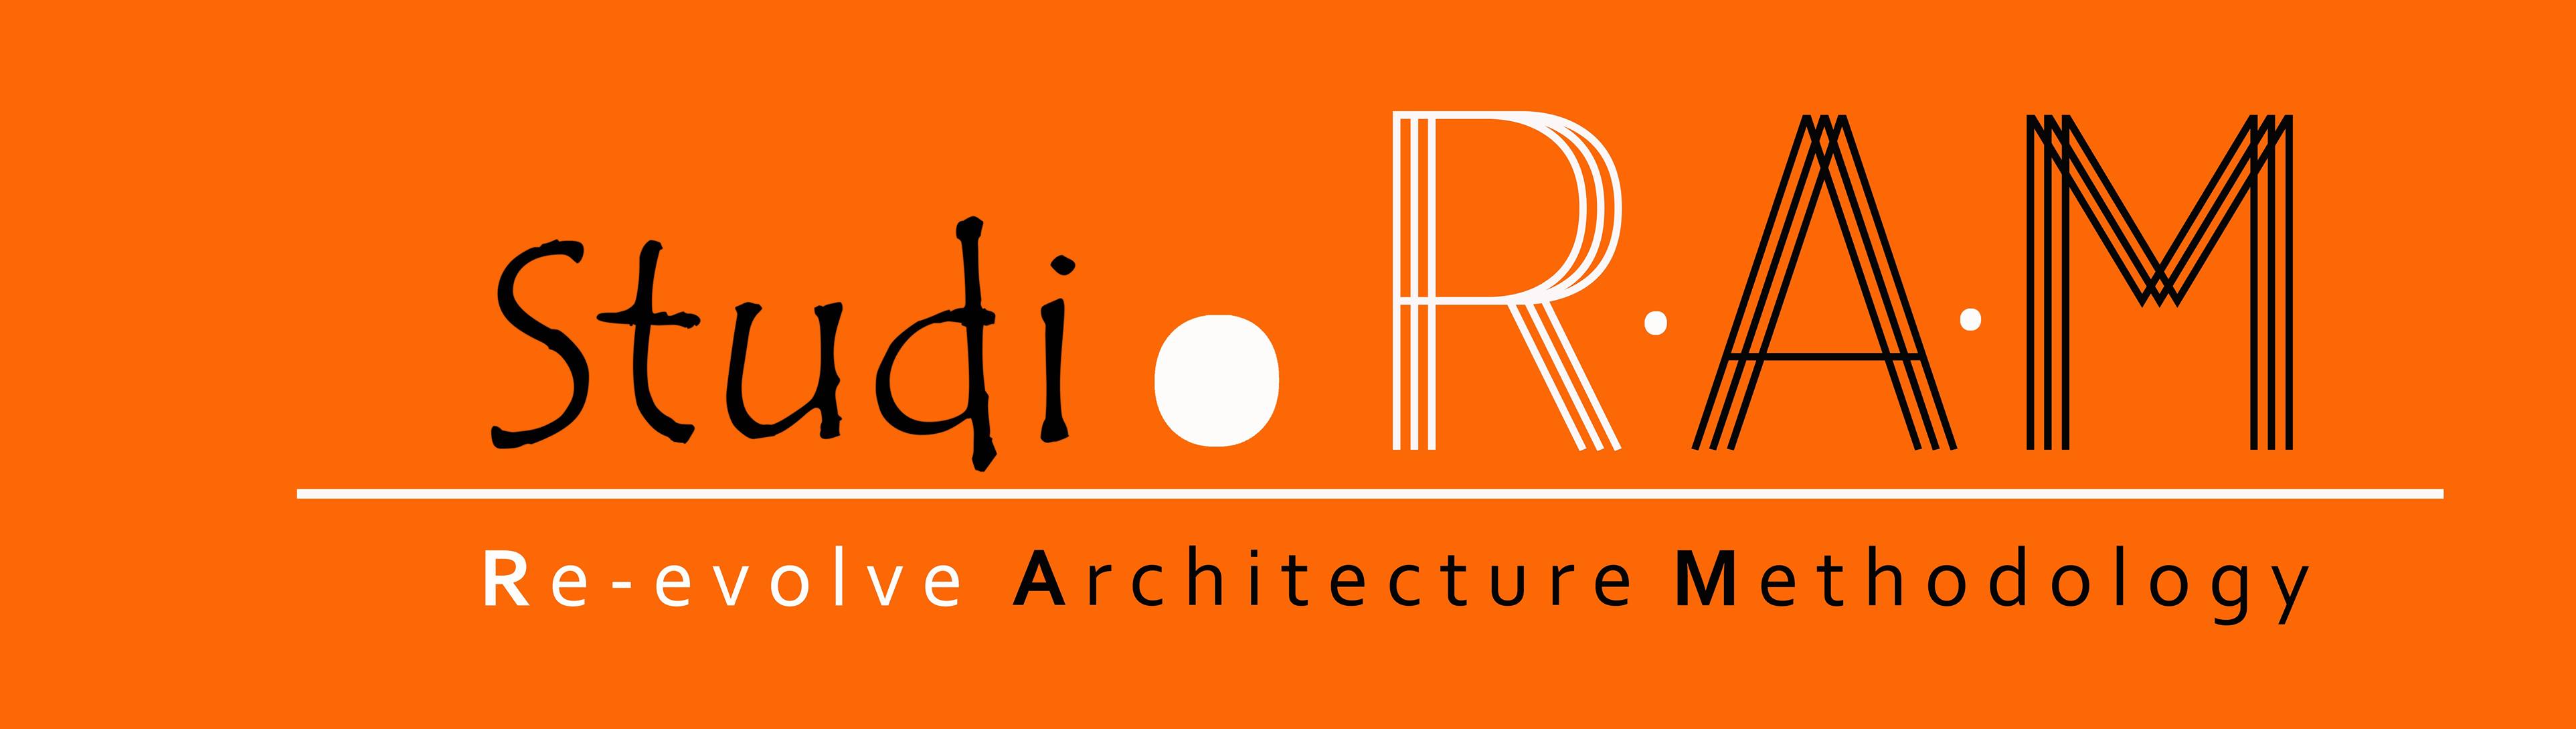 Studio RAM architects|Legal Services|Professional Services